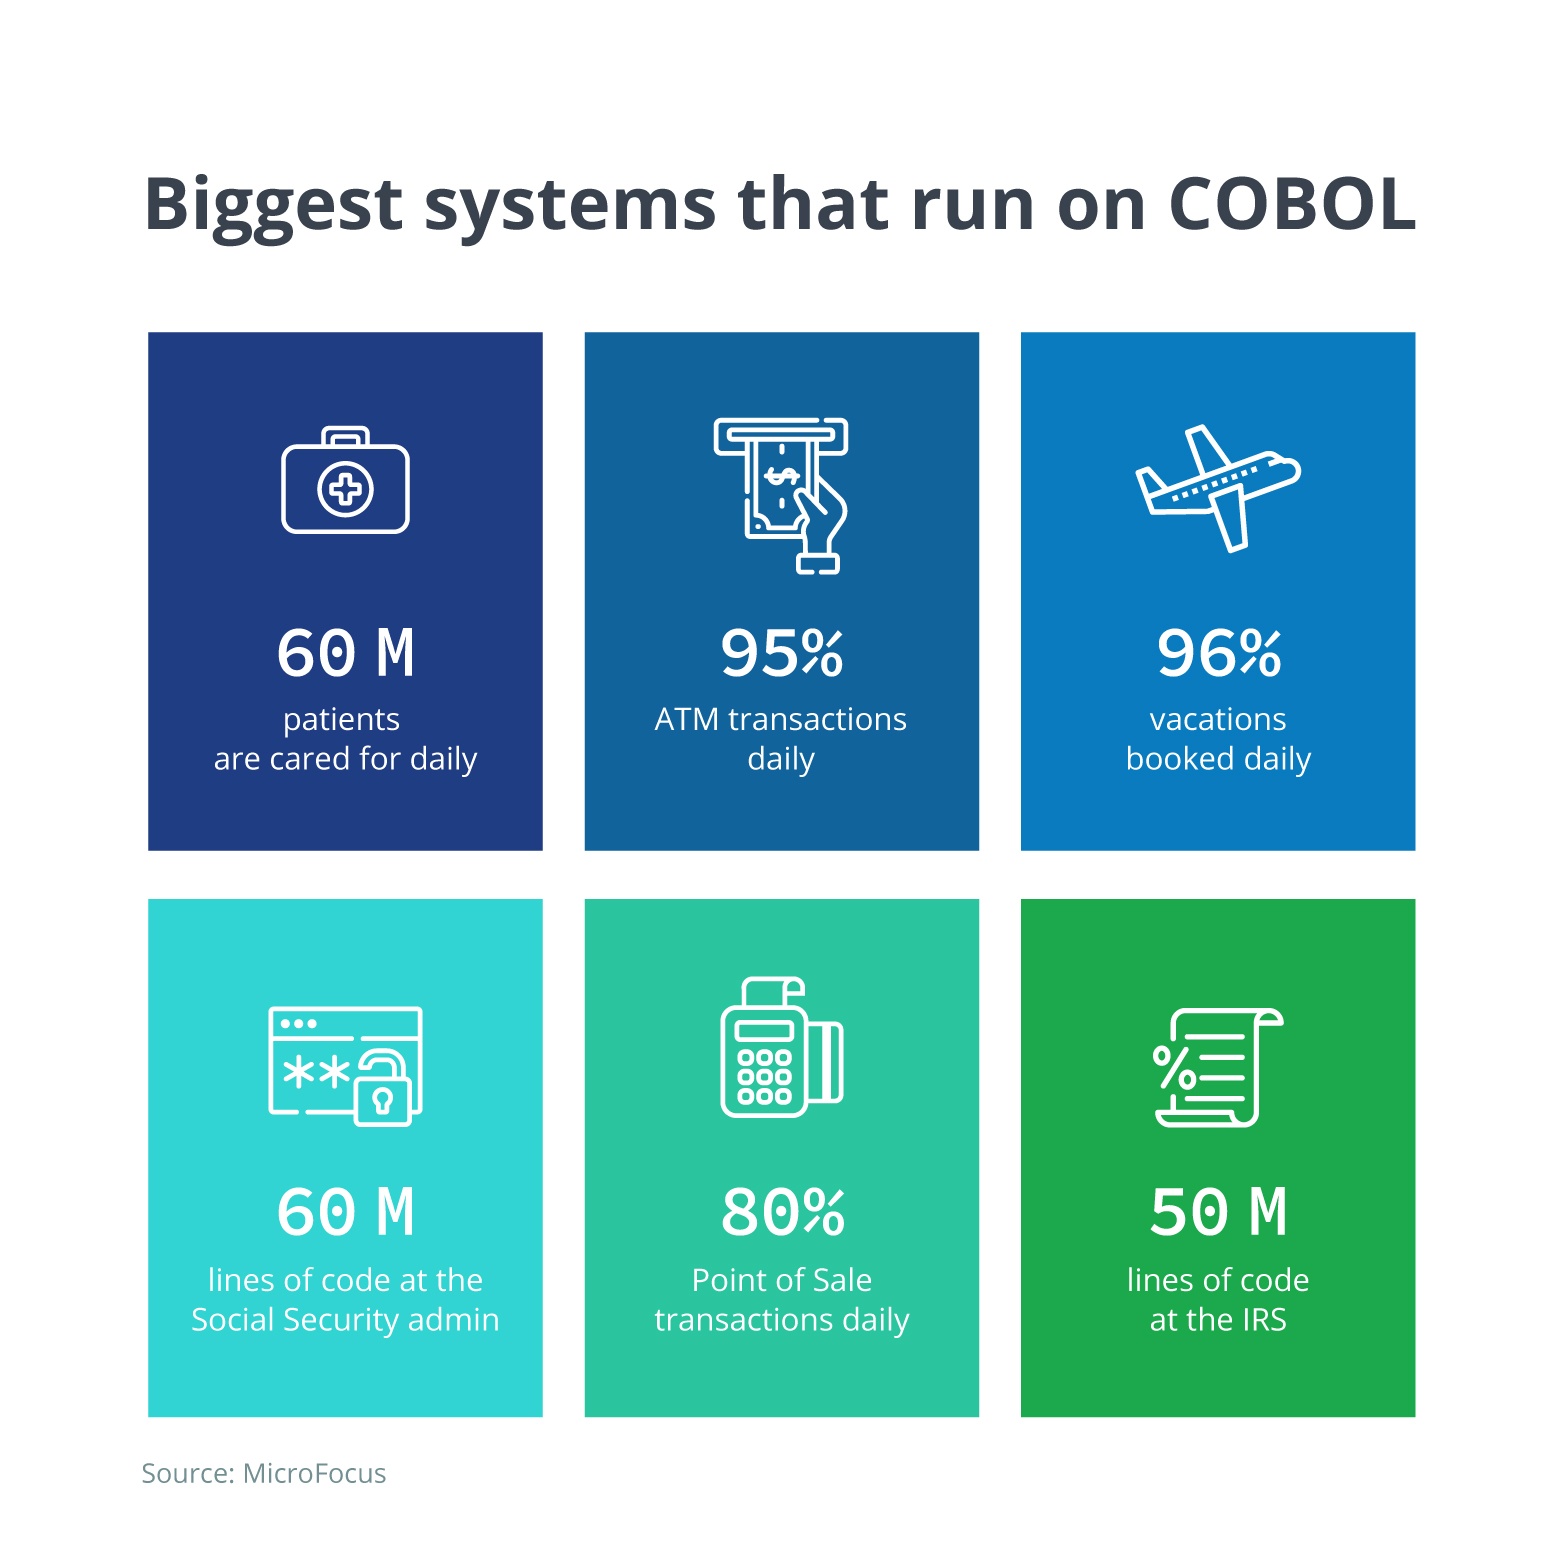 MicroFocus' data on biggest systems that run on COBOL